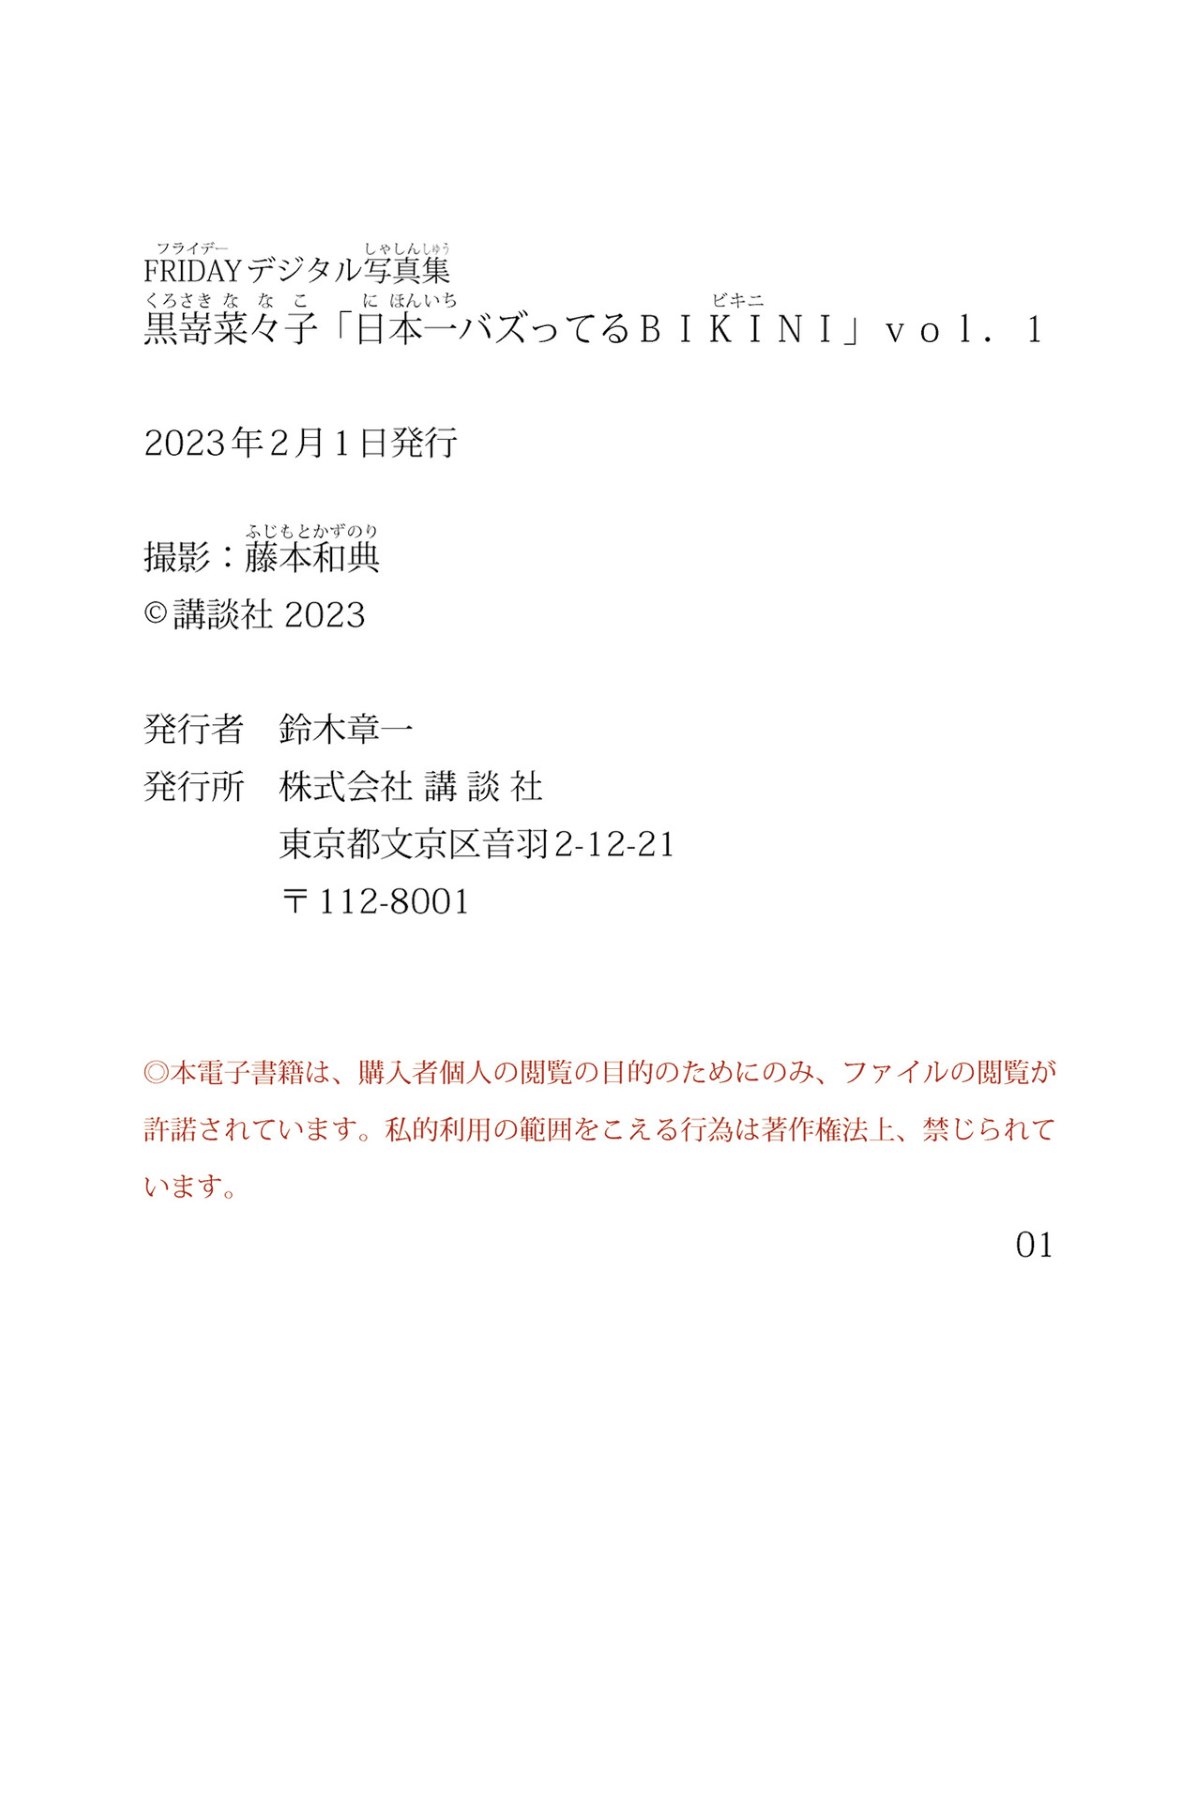 FRIDAY Digital Photobook 2023 01 27 Nanako Kurosaki 黒嵜菜々子 Nihon Ichi Buzz Tteru Bikini Vol 1 0055 4563350802.jpg